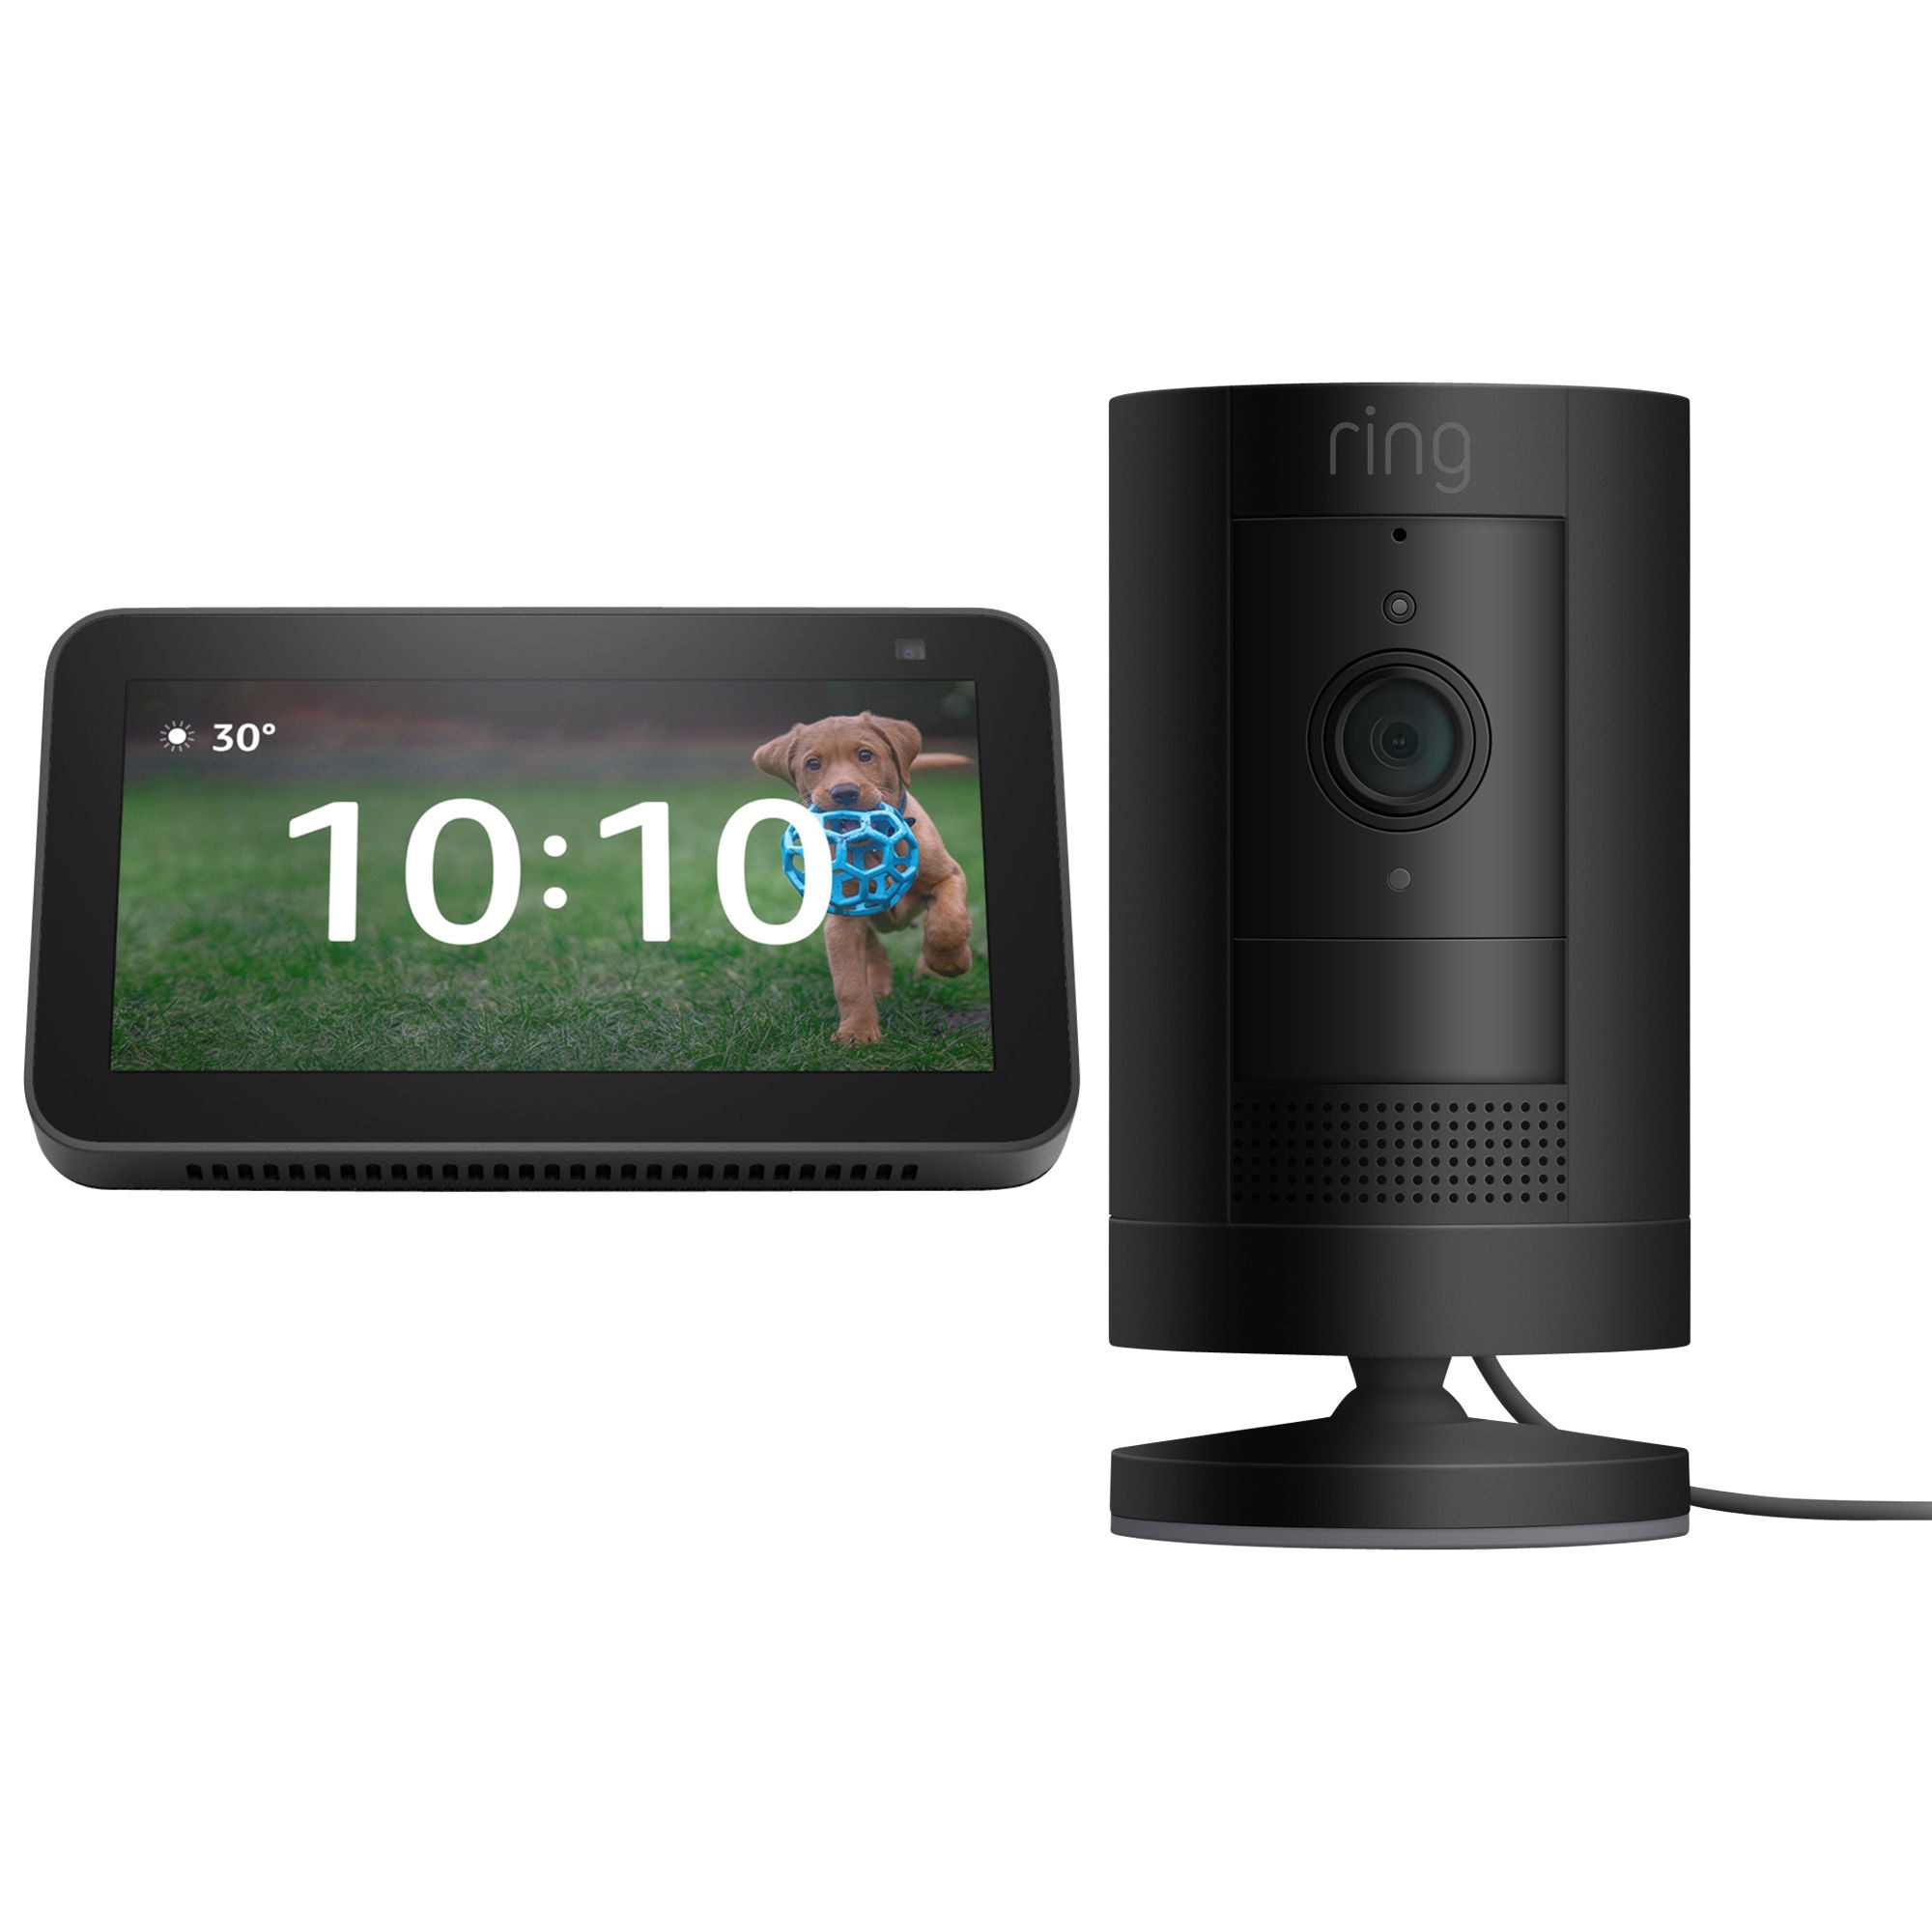 Ring Stick Up Camera Plug-in - Black + Amazon Echo Show 5 - Black Bundle